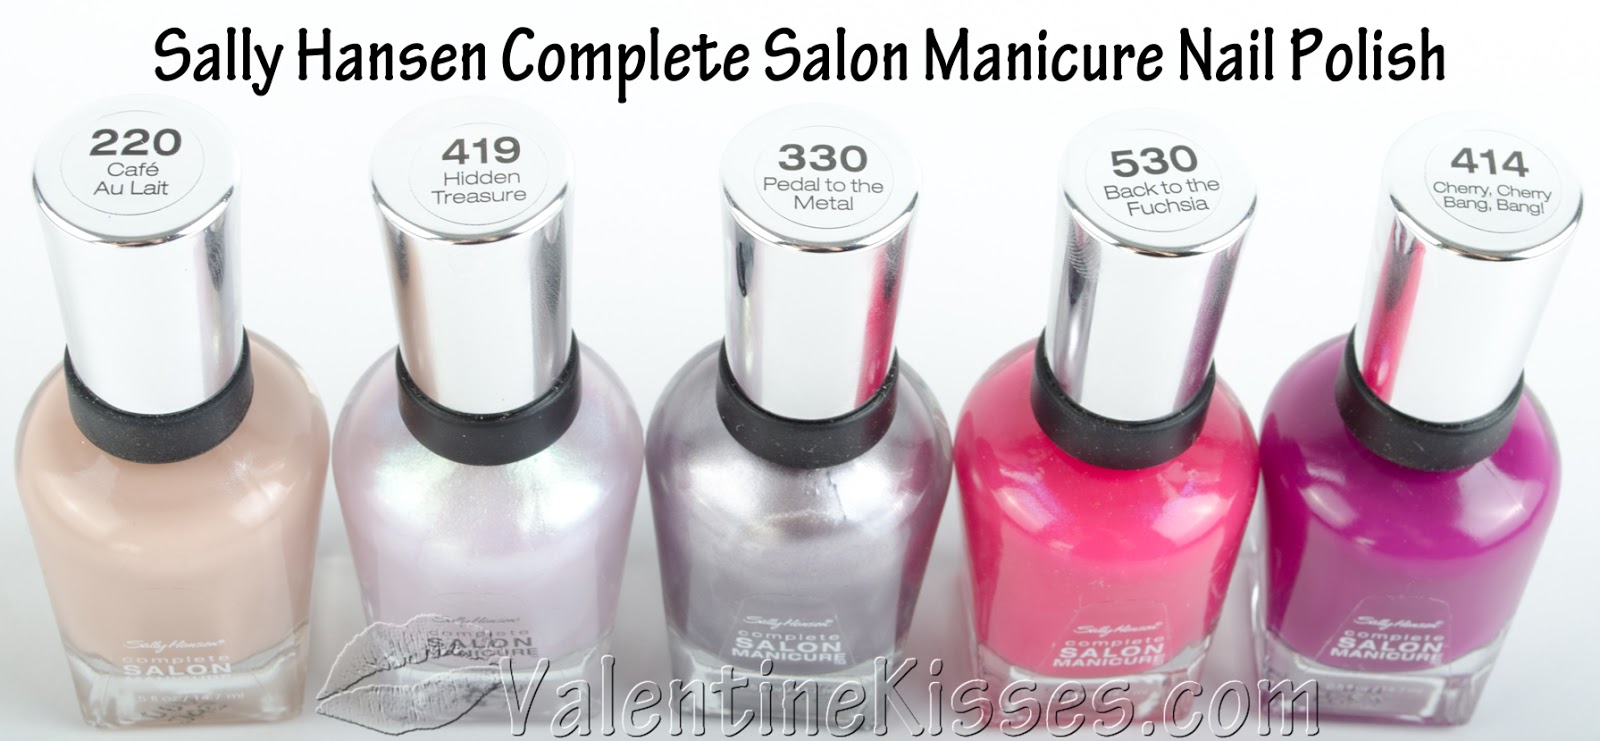 10. Sally Hansen Complete Salon Manicure Nail Polish - All Colors - wide 3